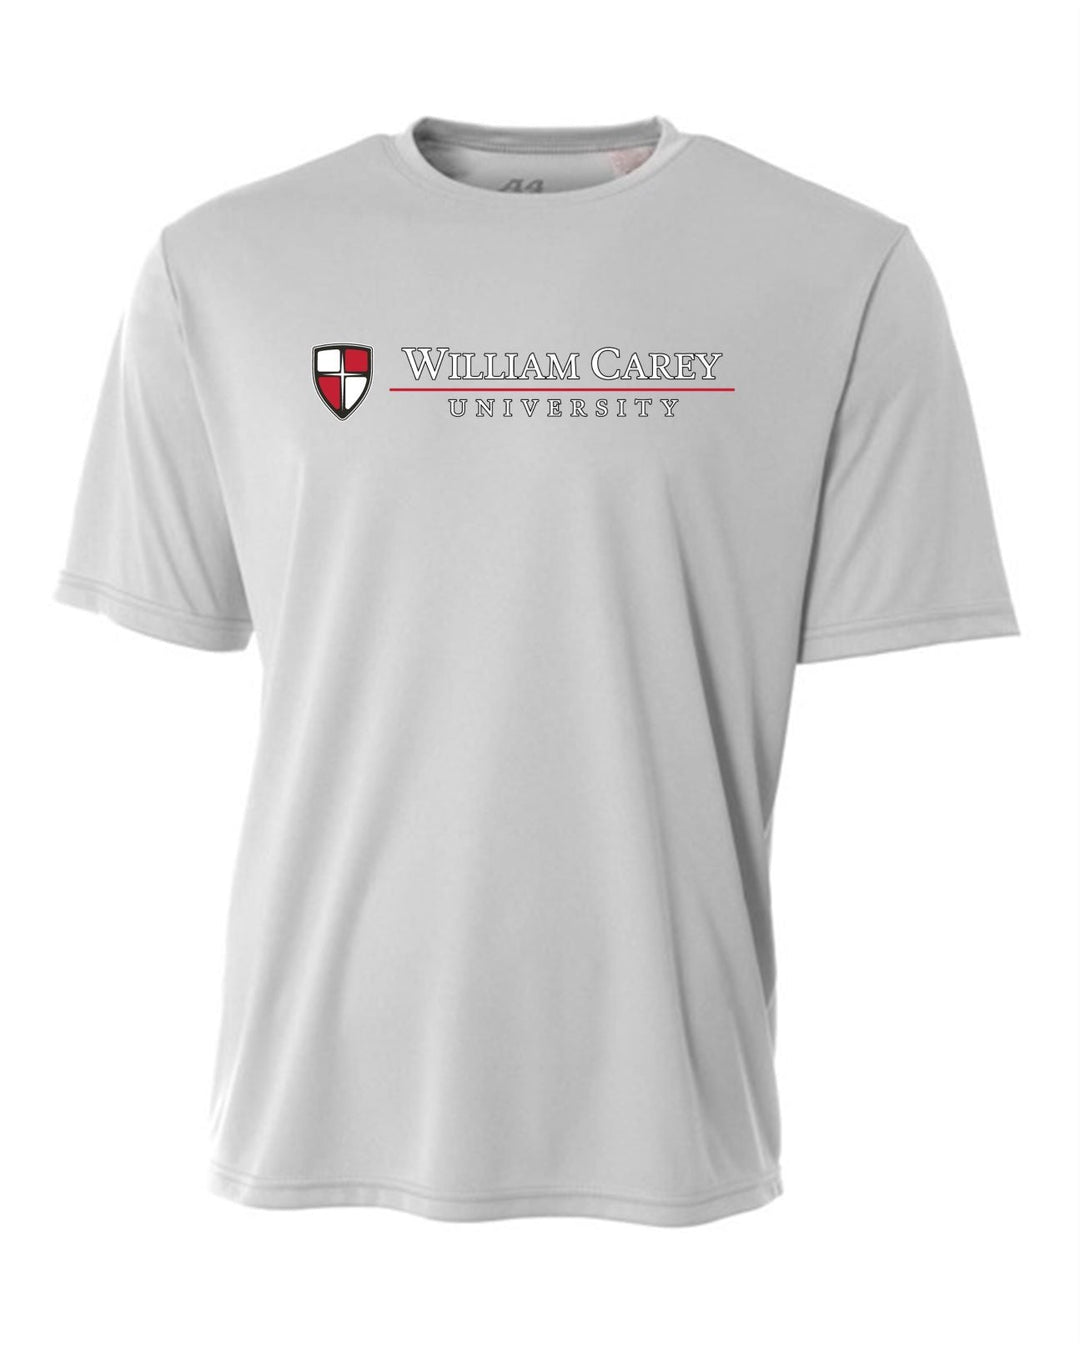 WCU School Of Education Youth Short-Sleeve Performance Shirt WCU Education Silver Grey Youth Small - Third Coast Soccer